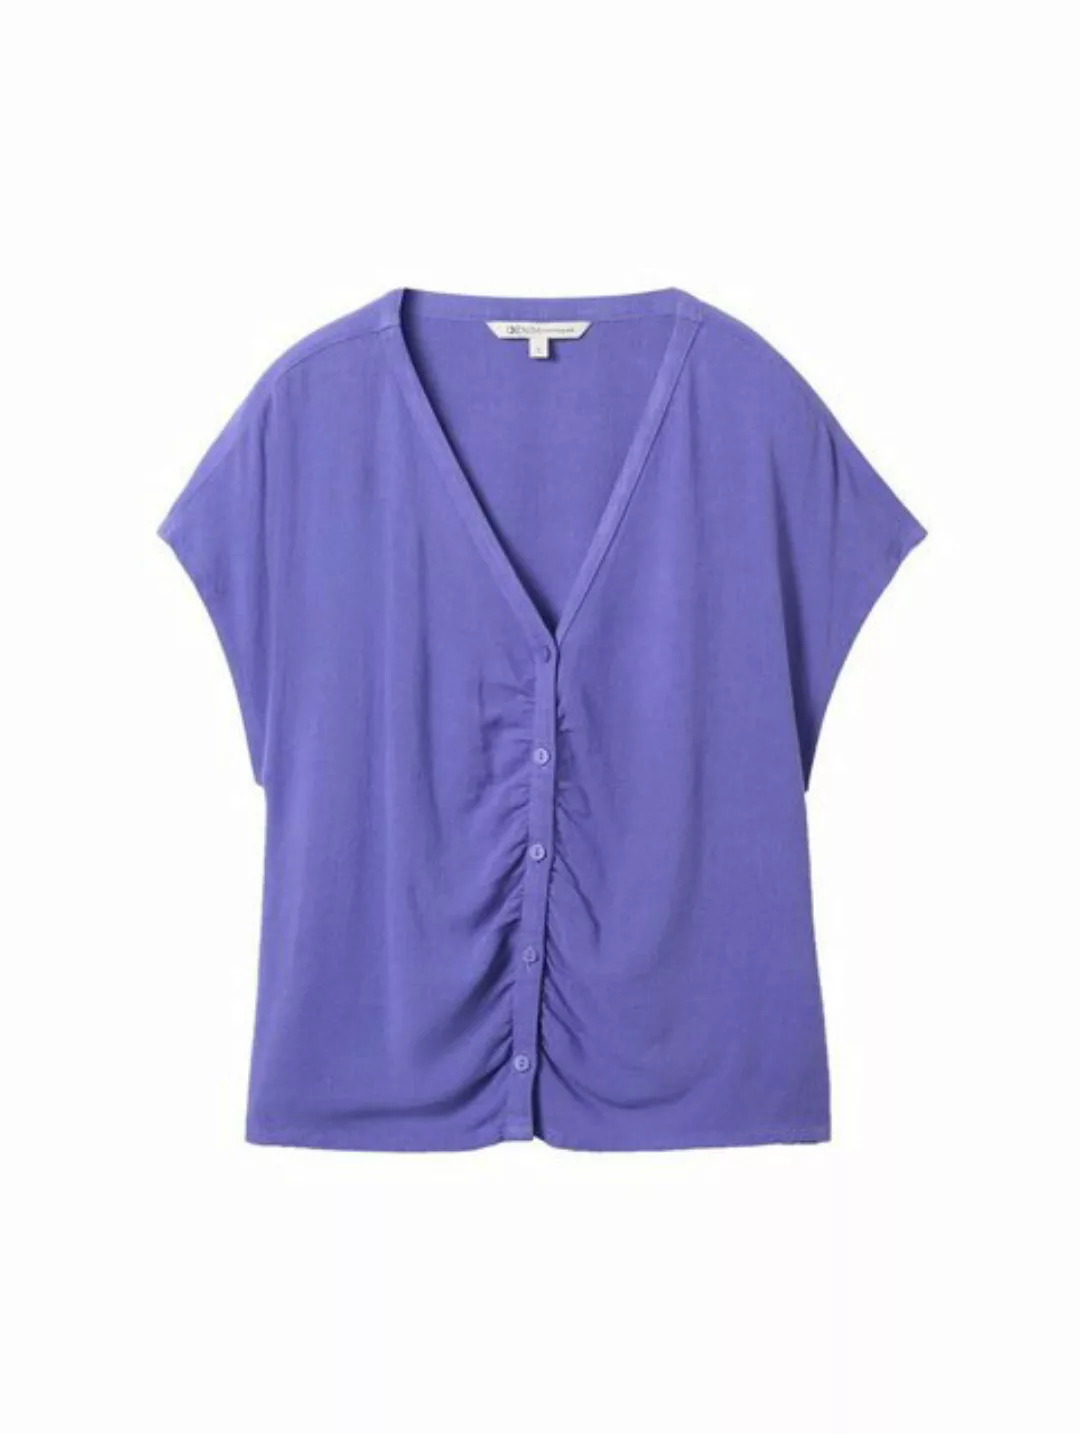 TOM TAILOR Denim Blusenshirt v-neck blouse with buttons, vibrant purple günstig online kaufen